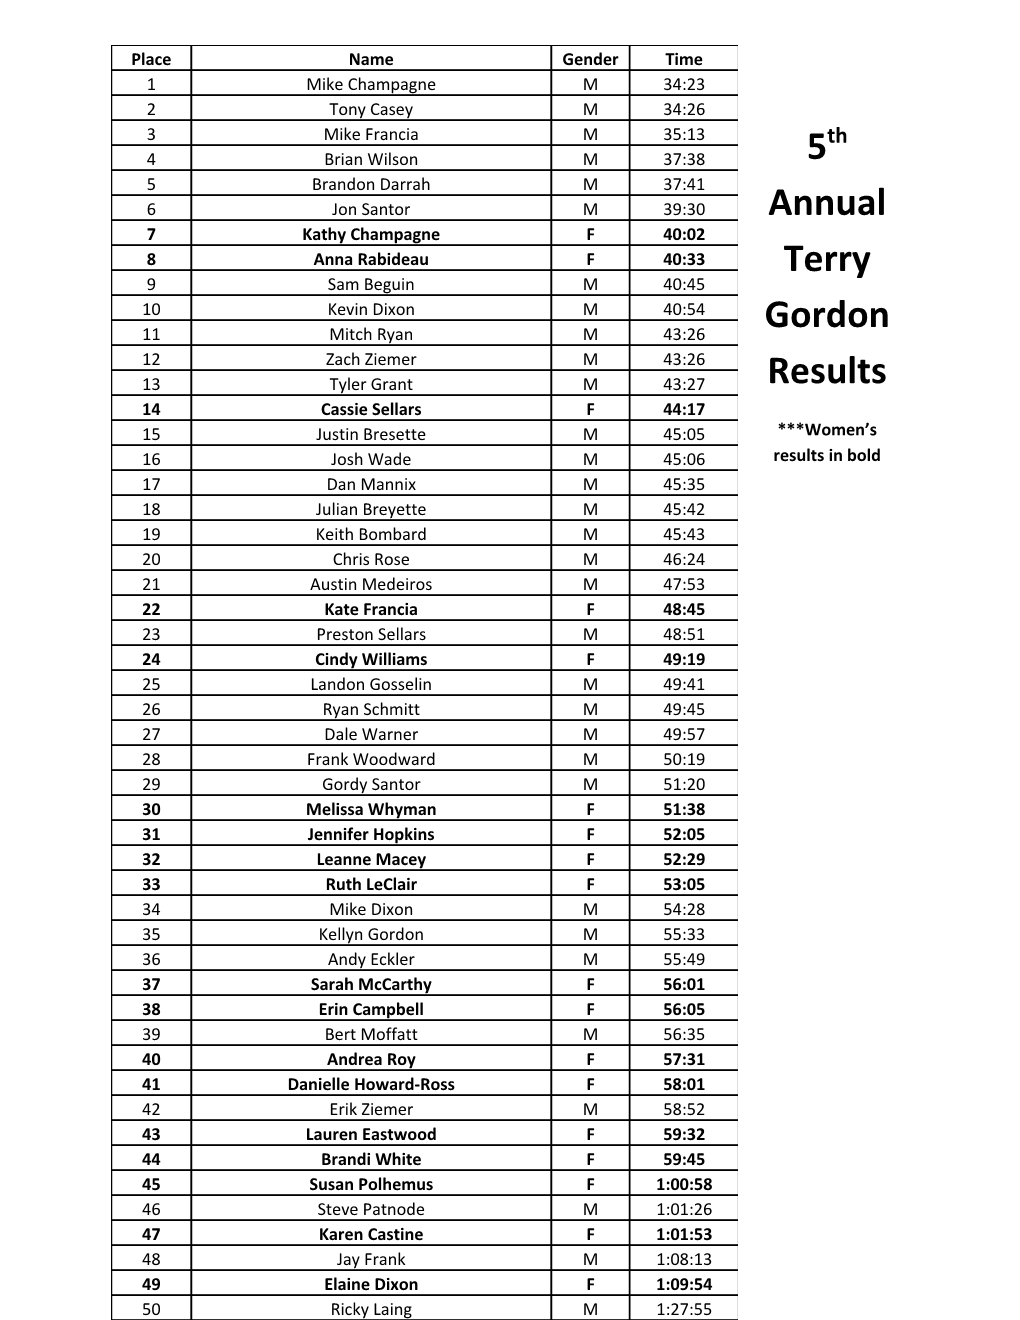 5Th Annual Terry Gordon Results